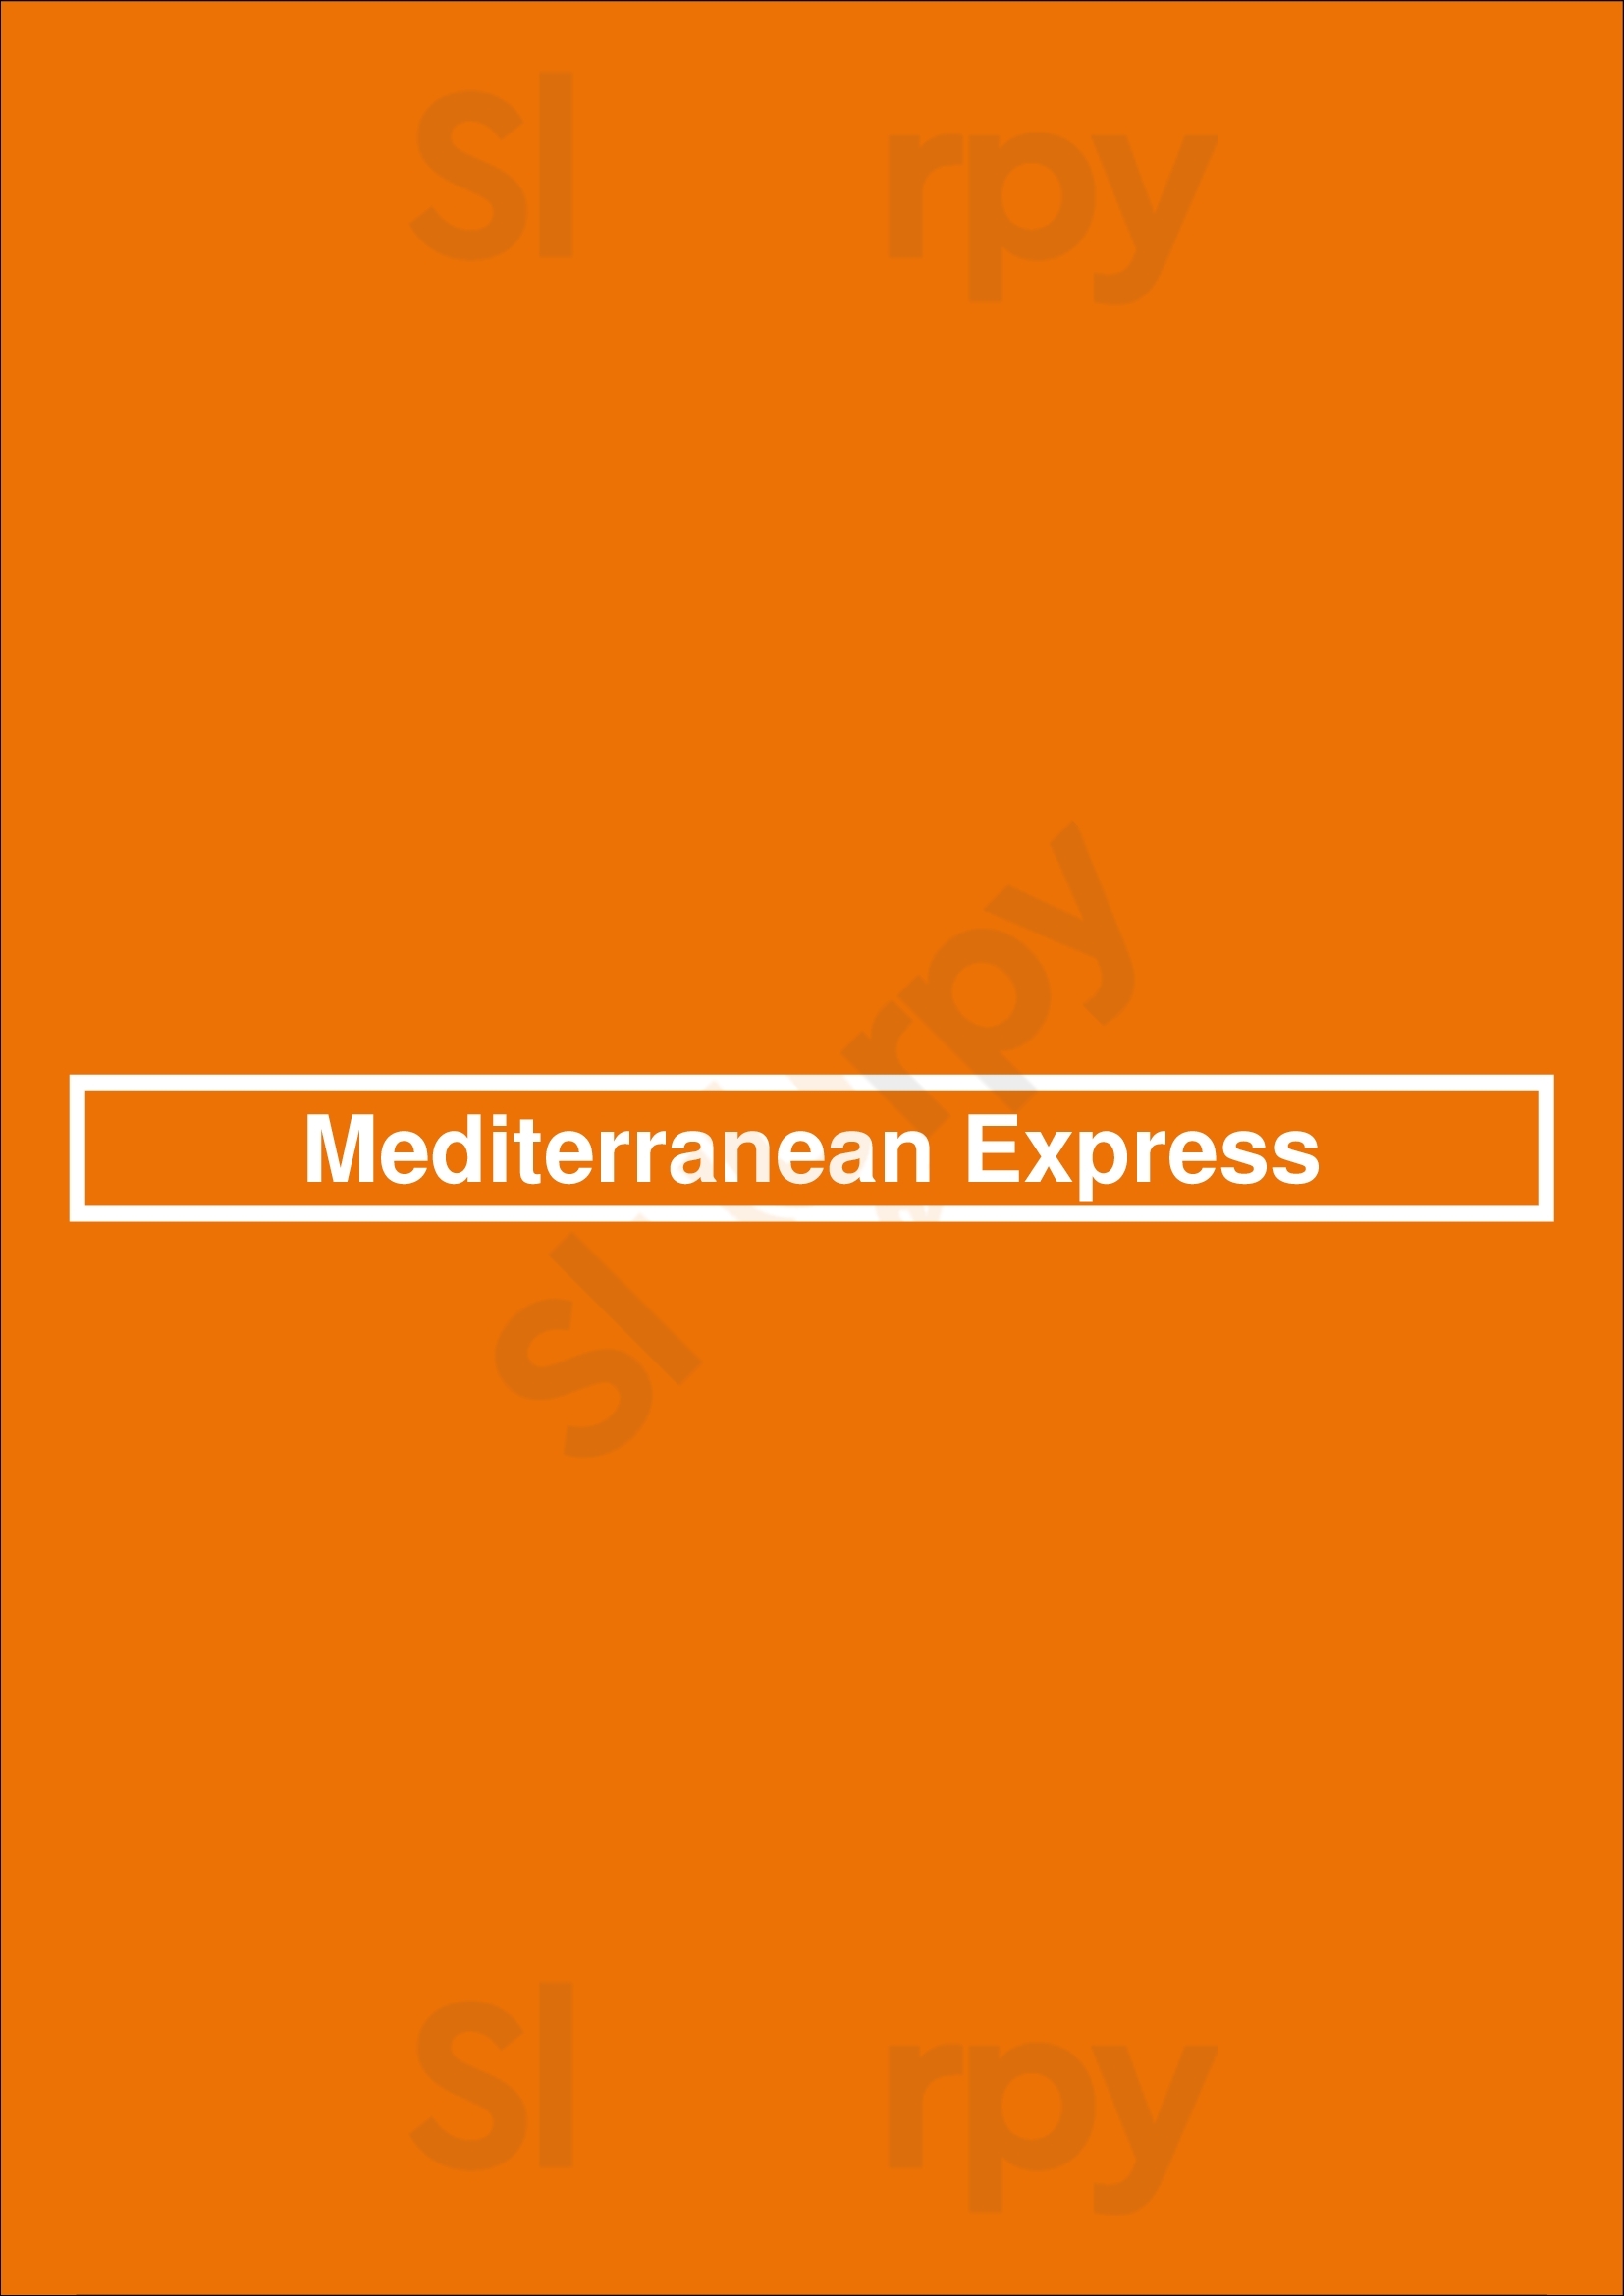 Mediterranean Express Seattle Menu - 1